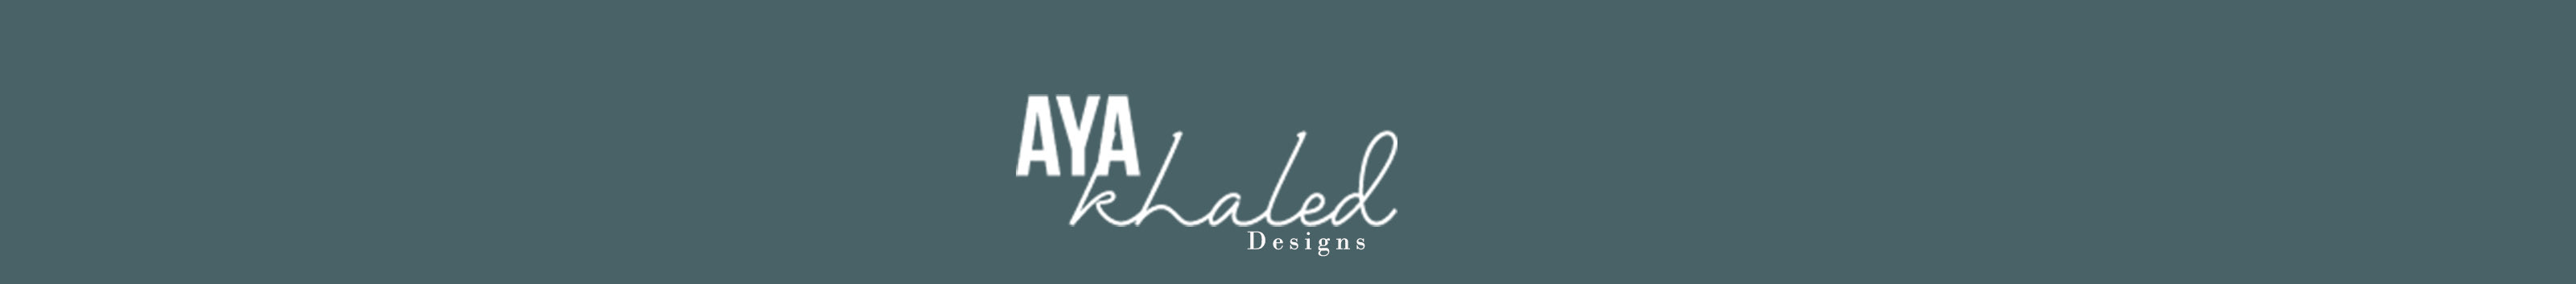 Aya khaled's profile banner